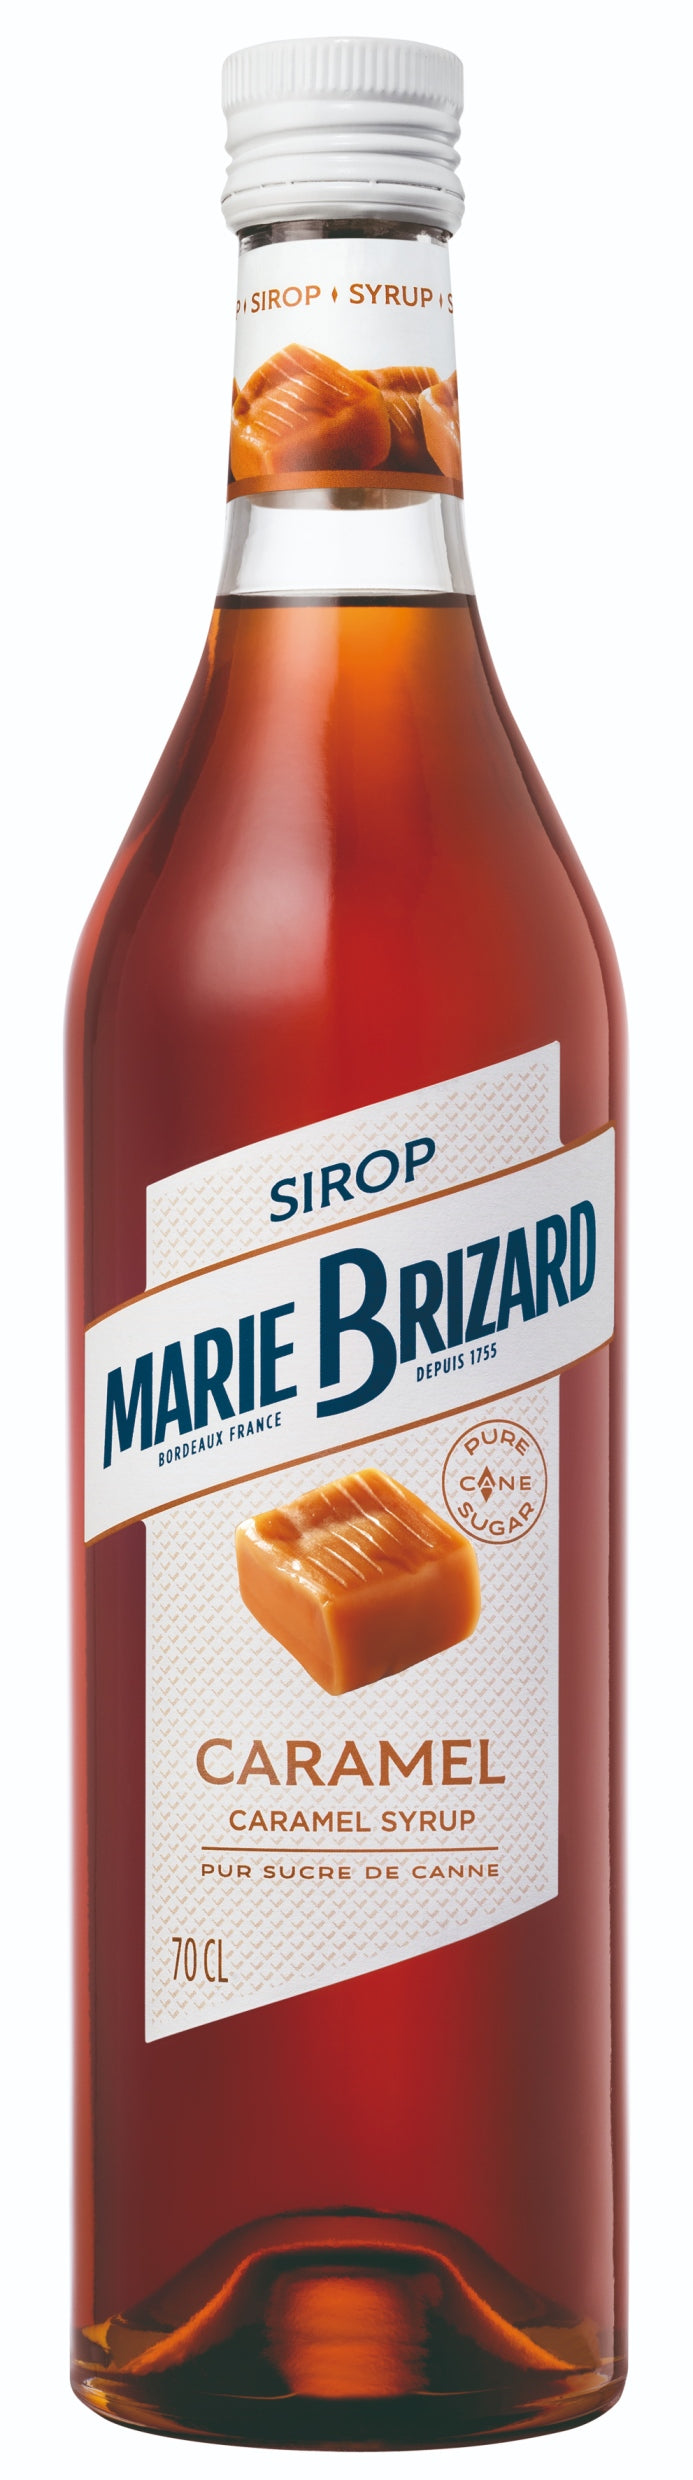 MARIE BRIZARD SIROP CARAMEL 70CL